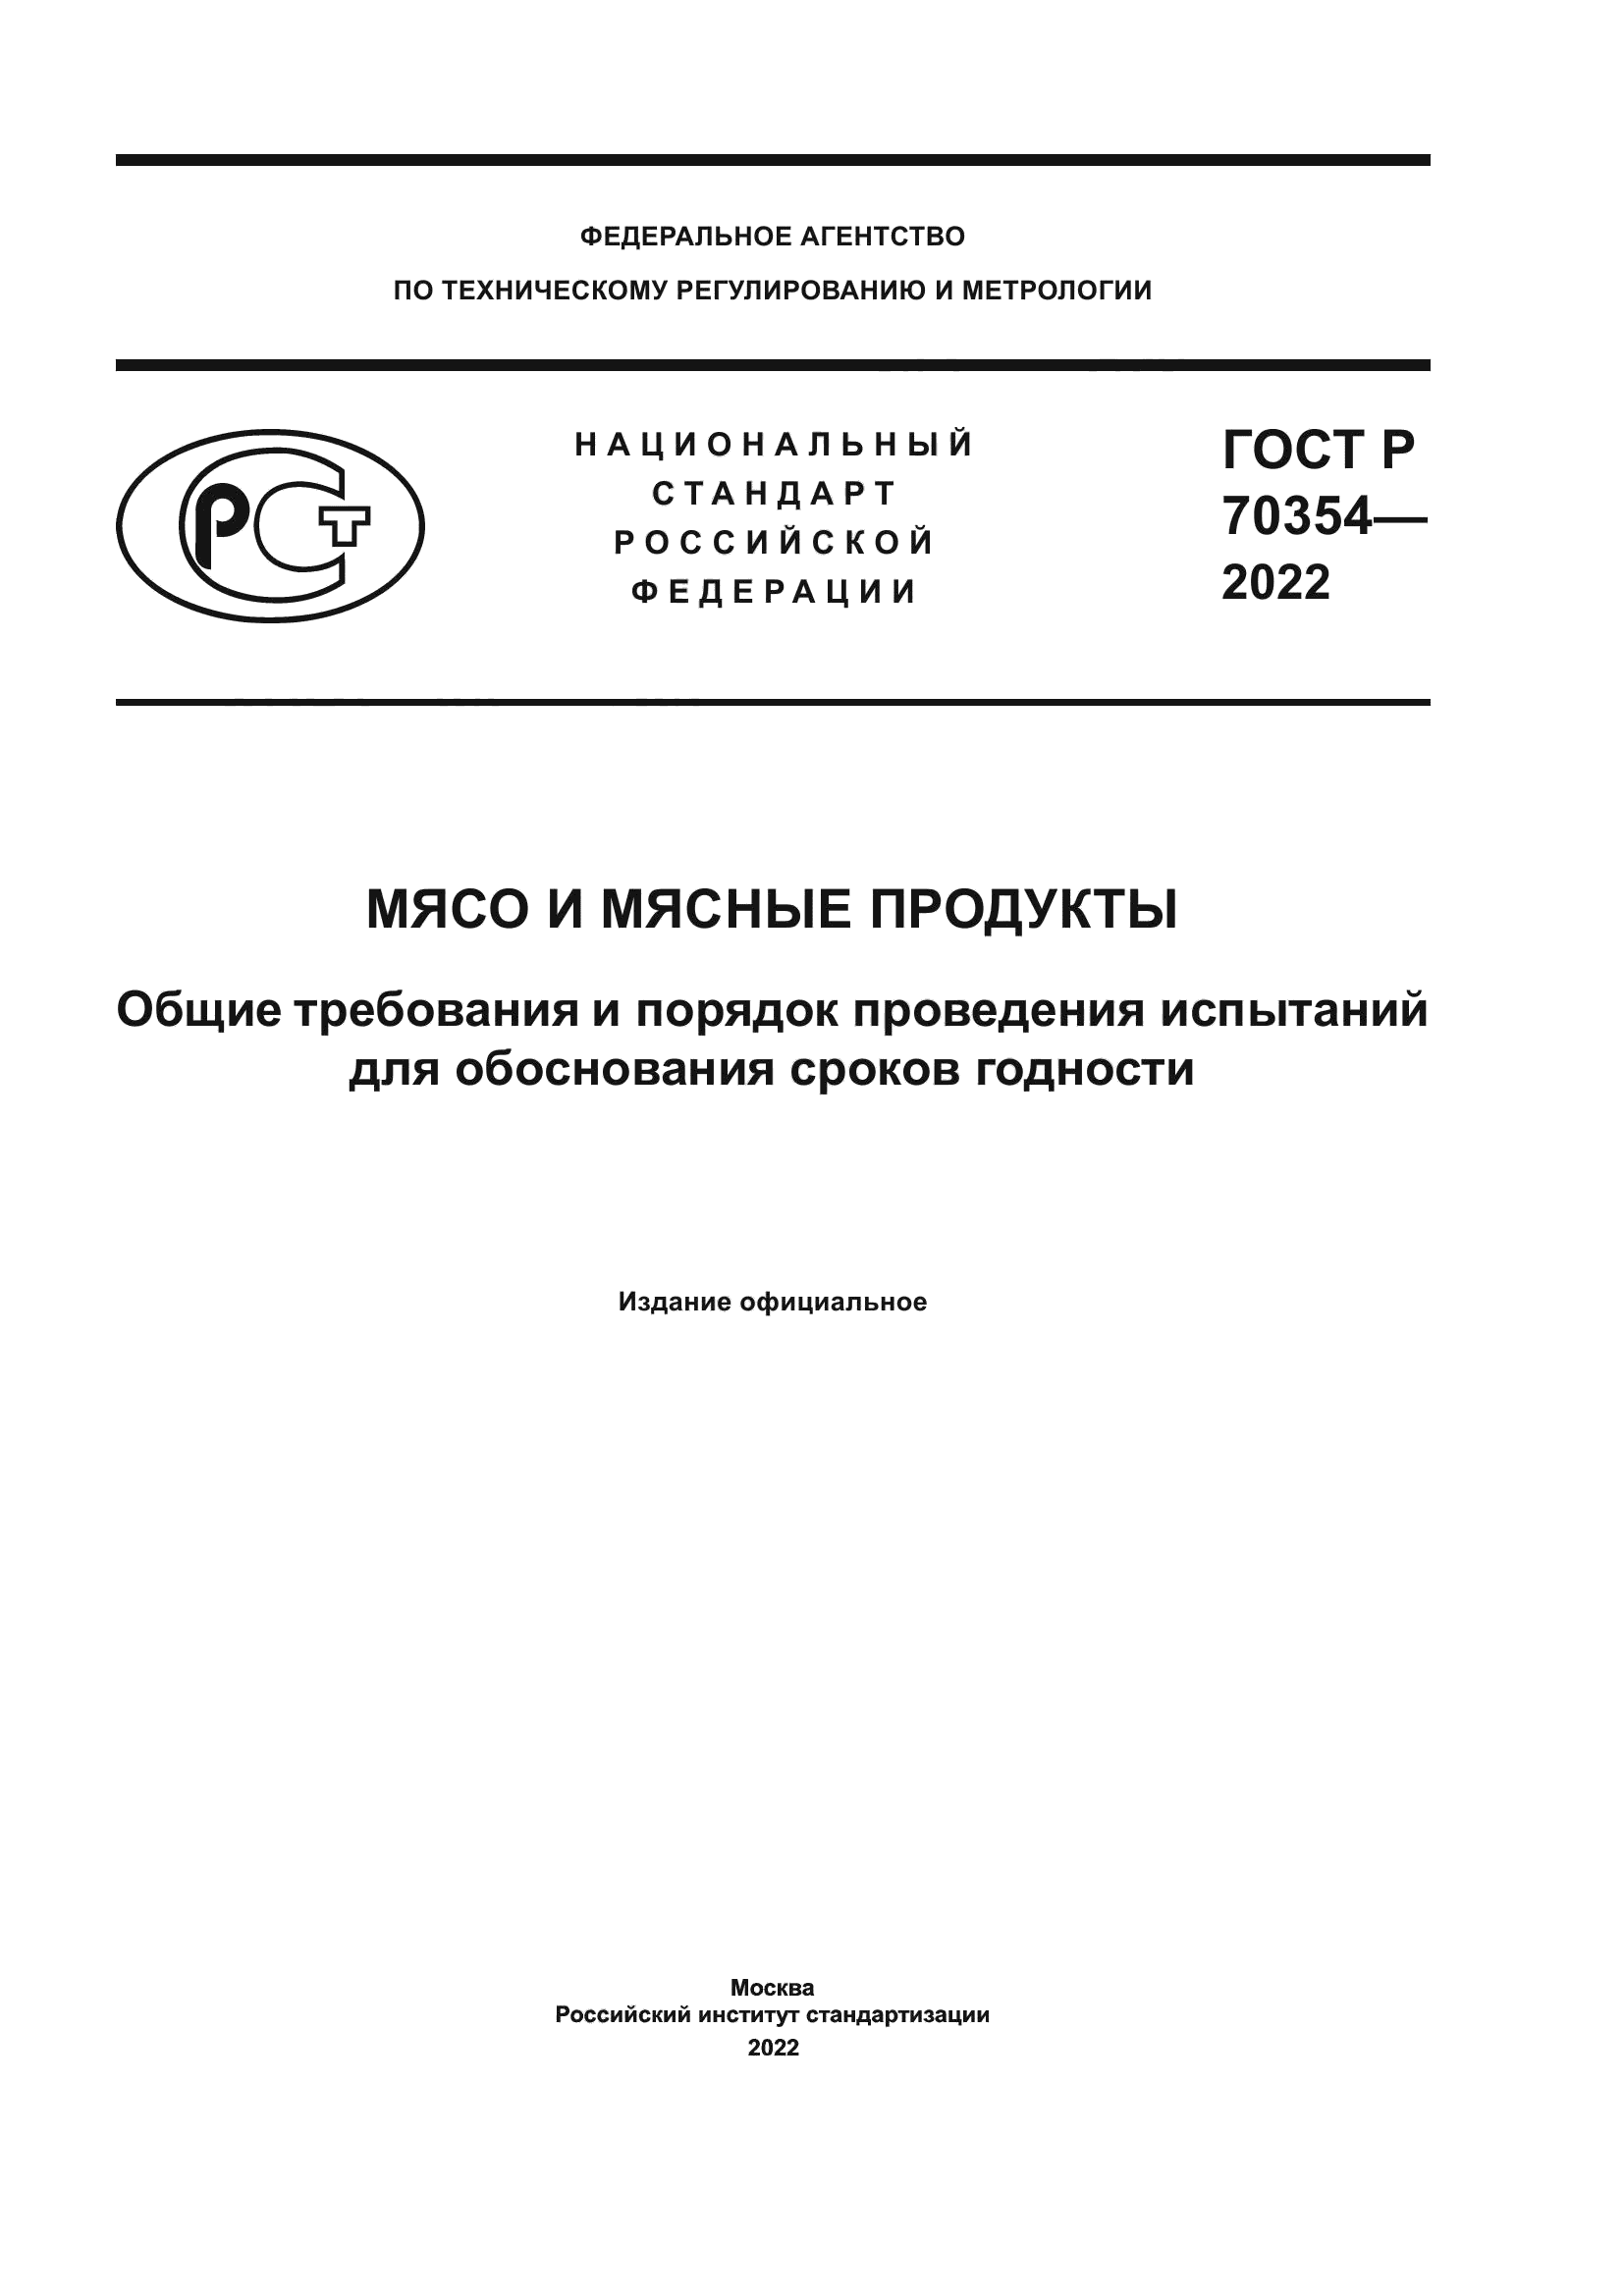 ГОСТ Р 70354-2022